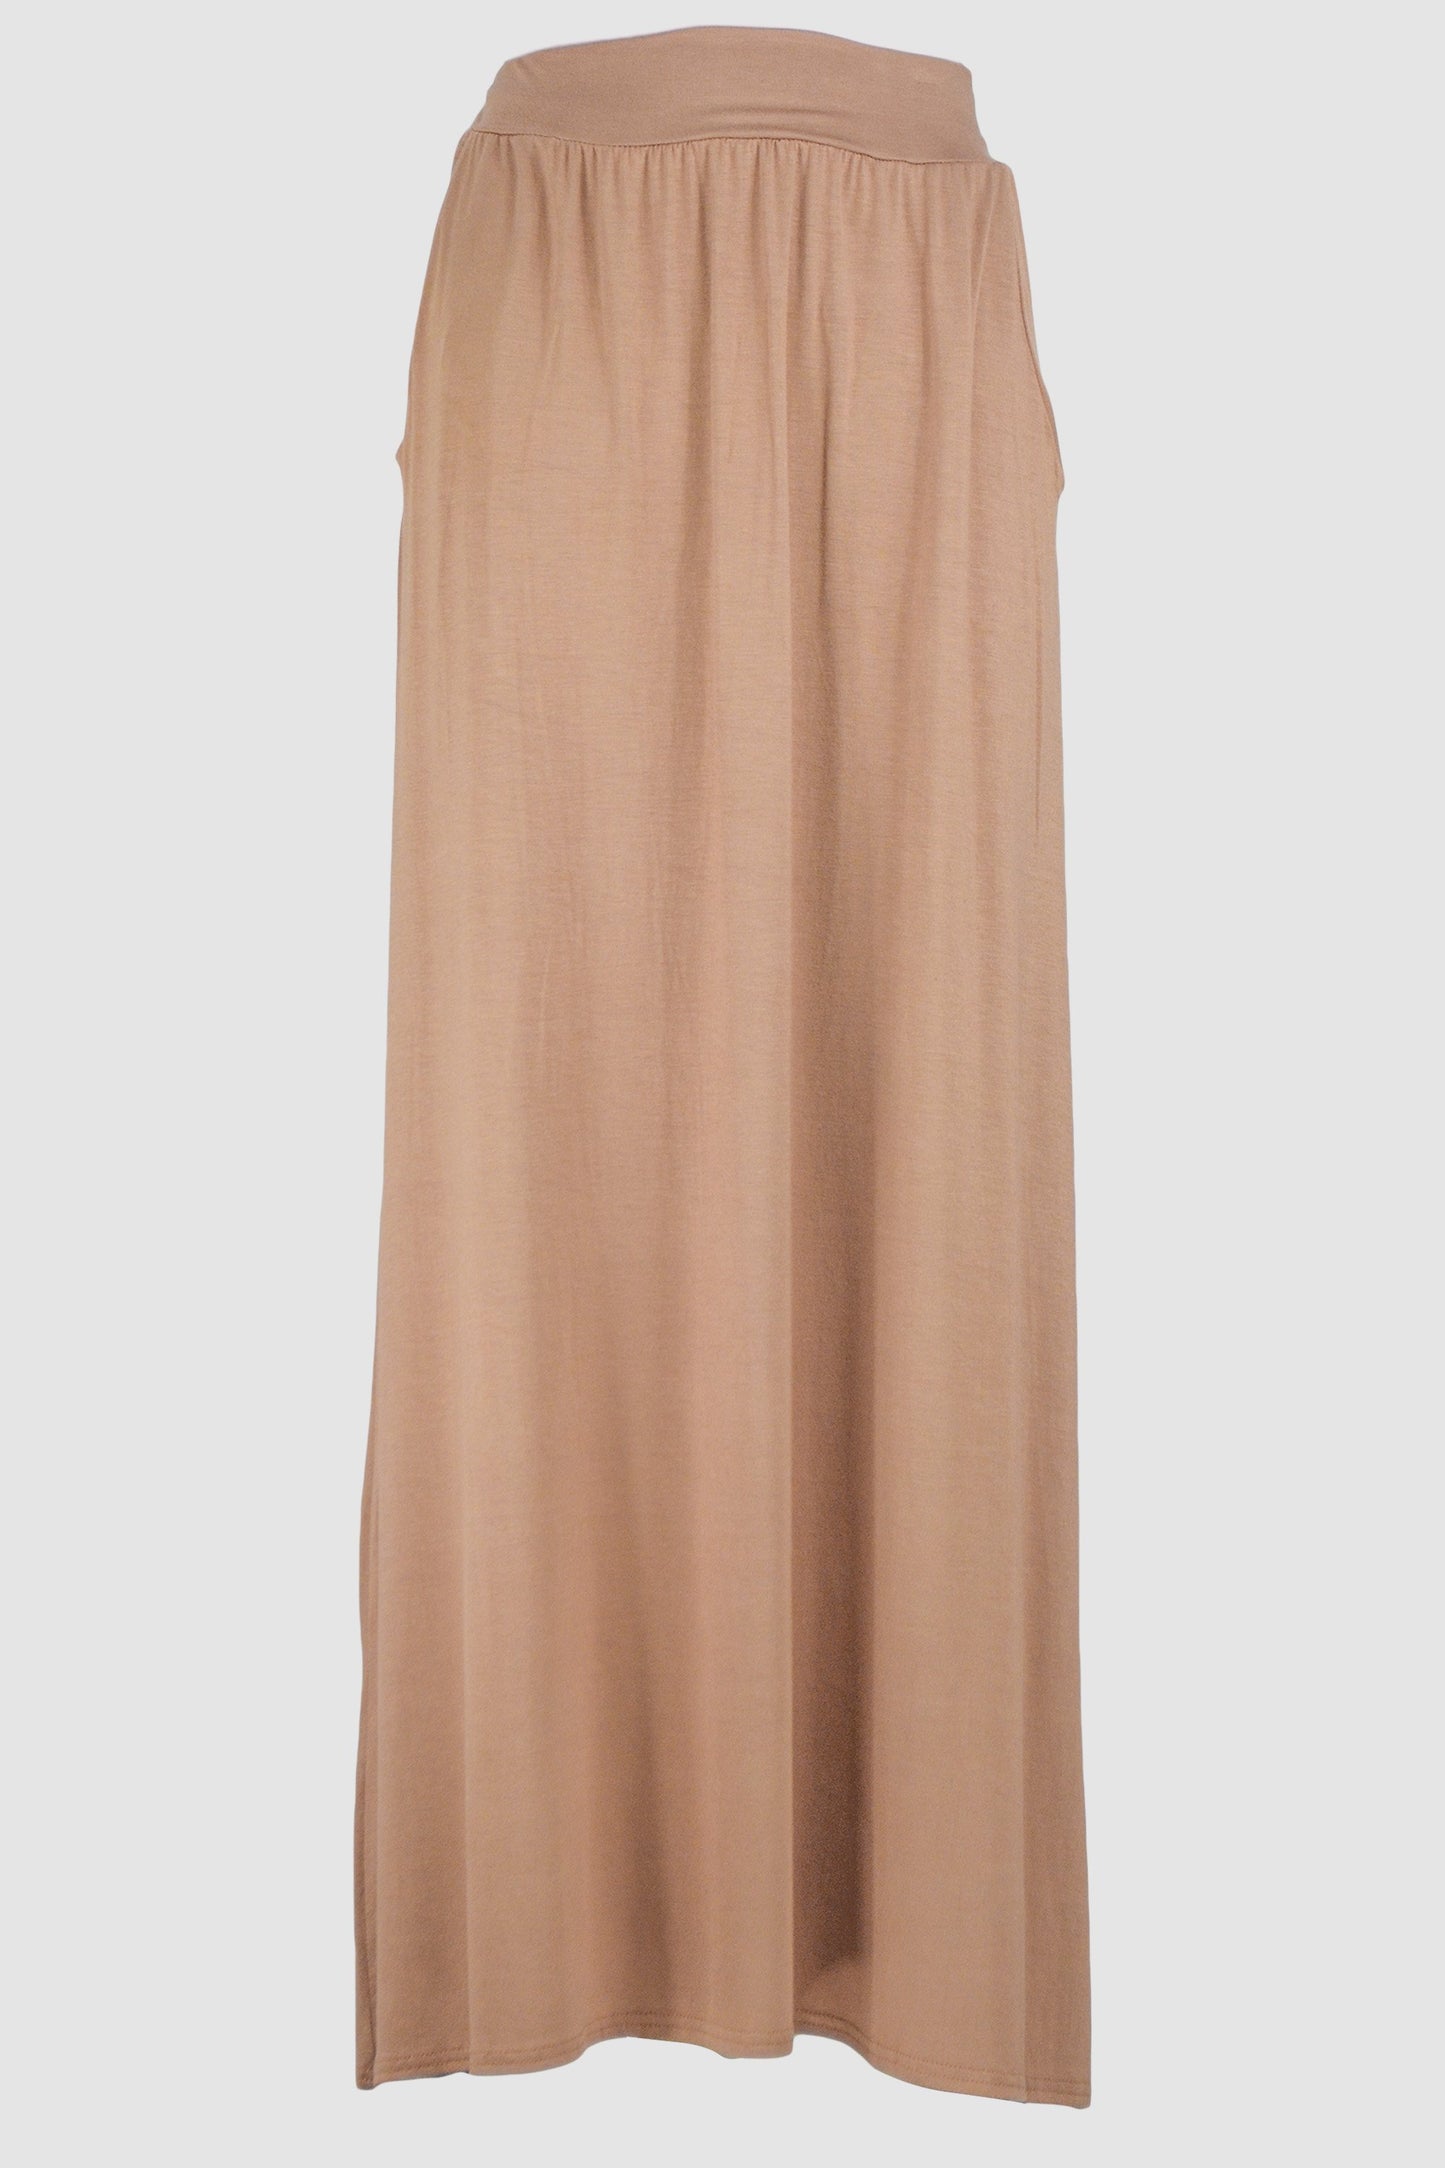 Caramel Jersey Skirt With Pockets-almanaar Islamic Store